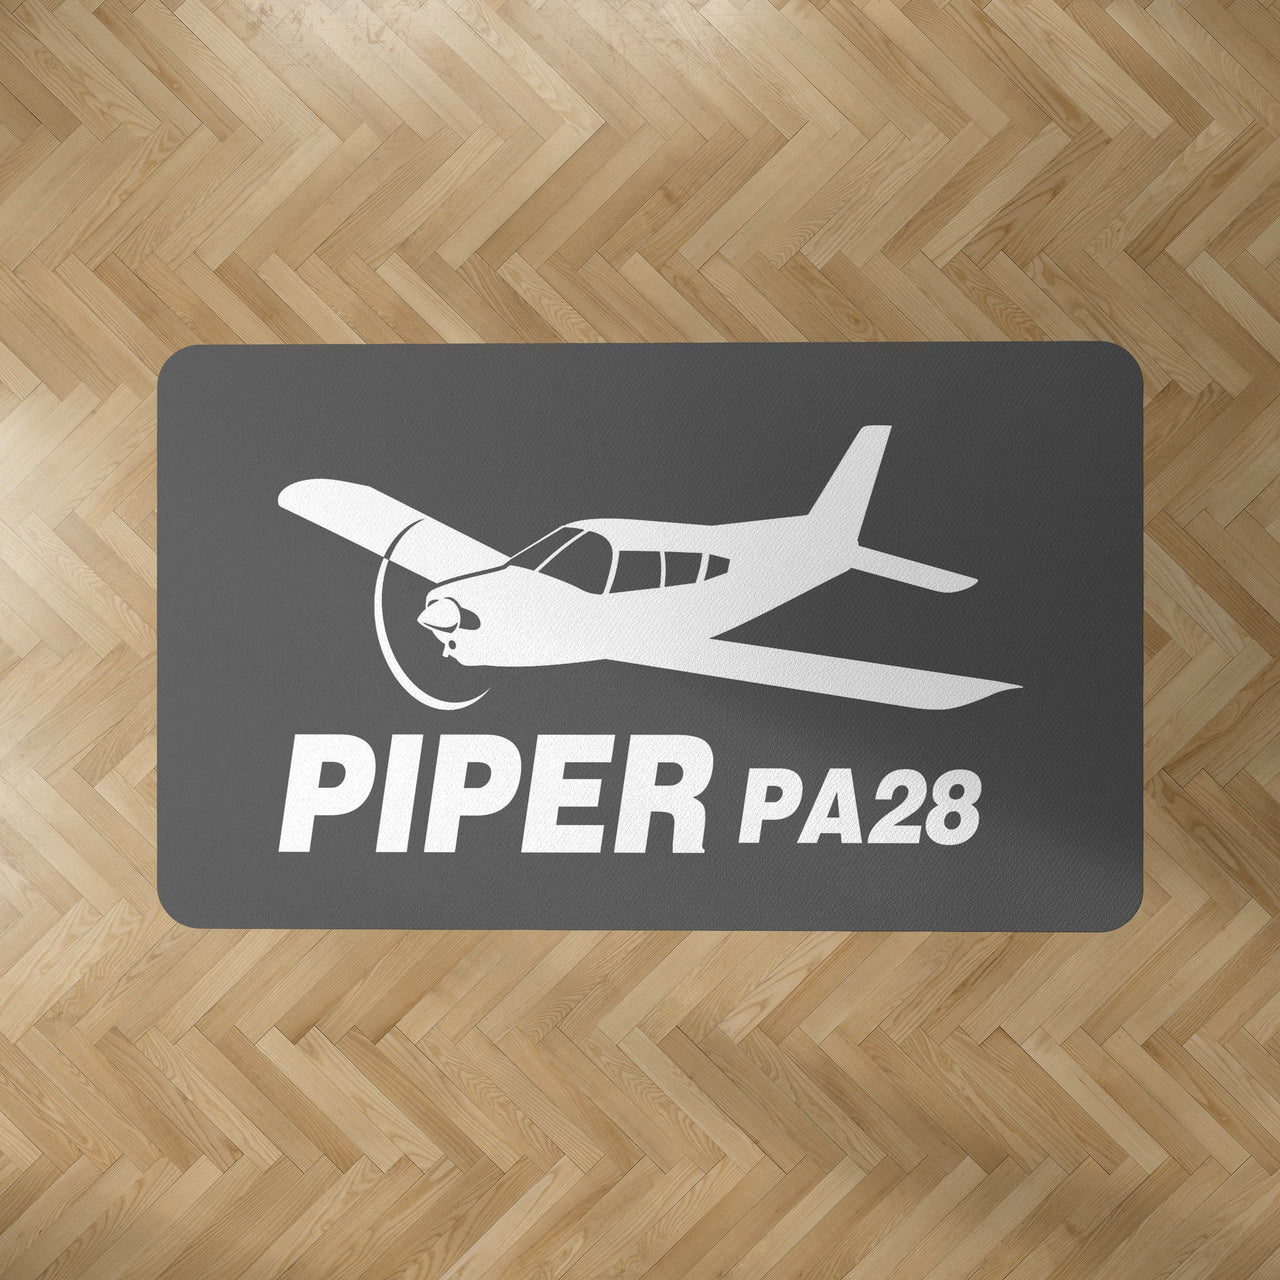 The Piper PA28 Designed Carpet & Floor Mats